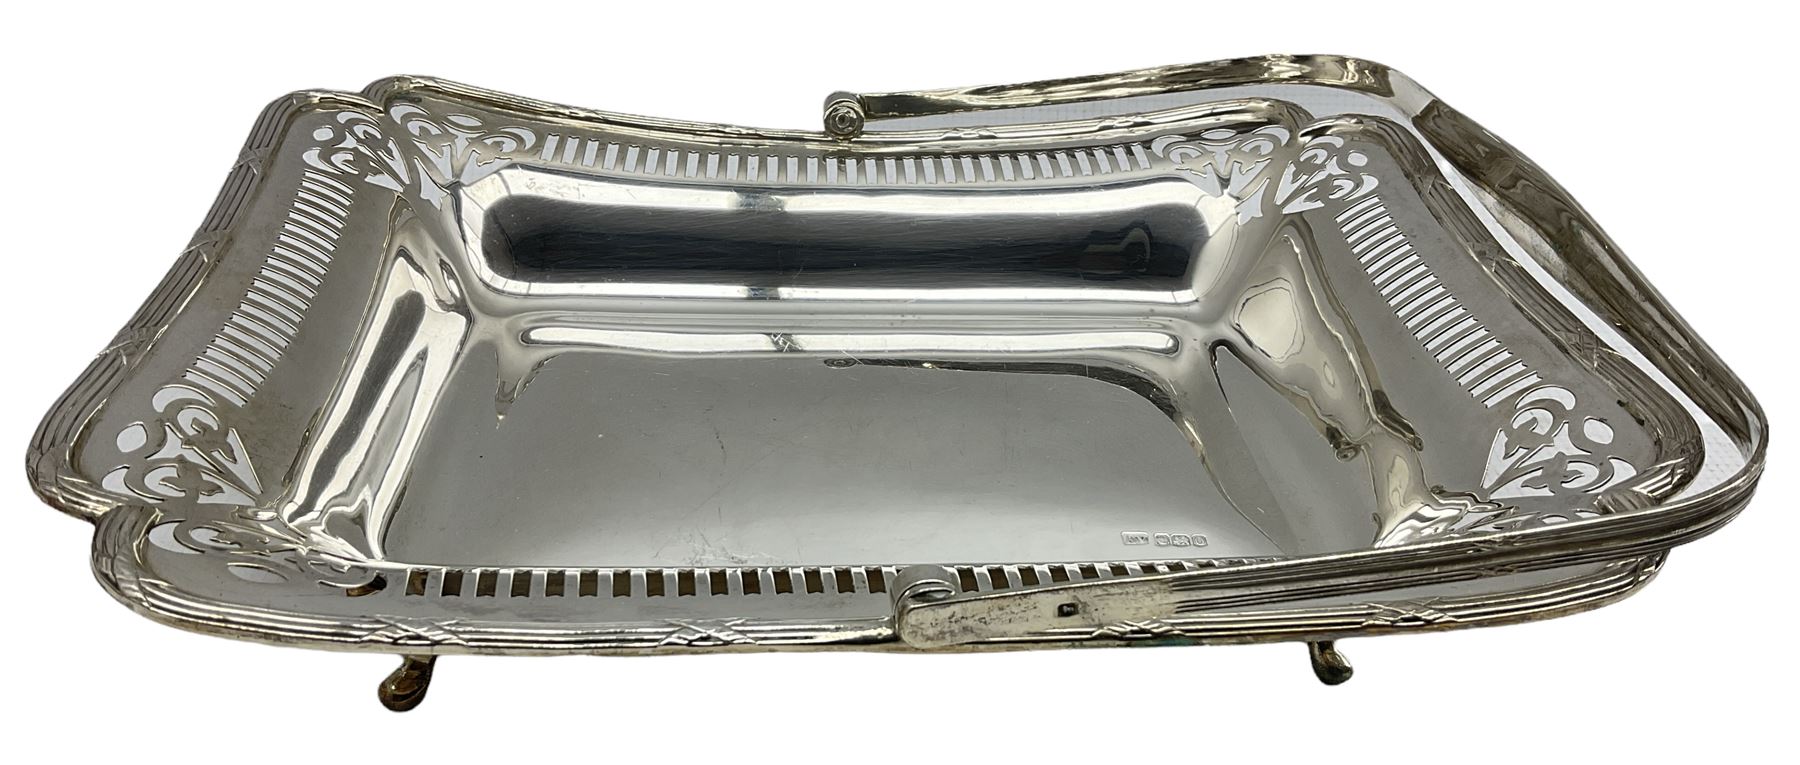 Silver rectangular cake basket with swing handle